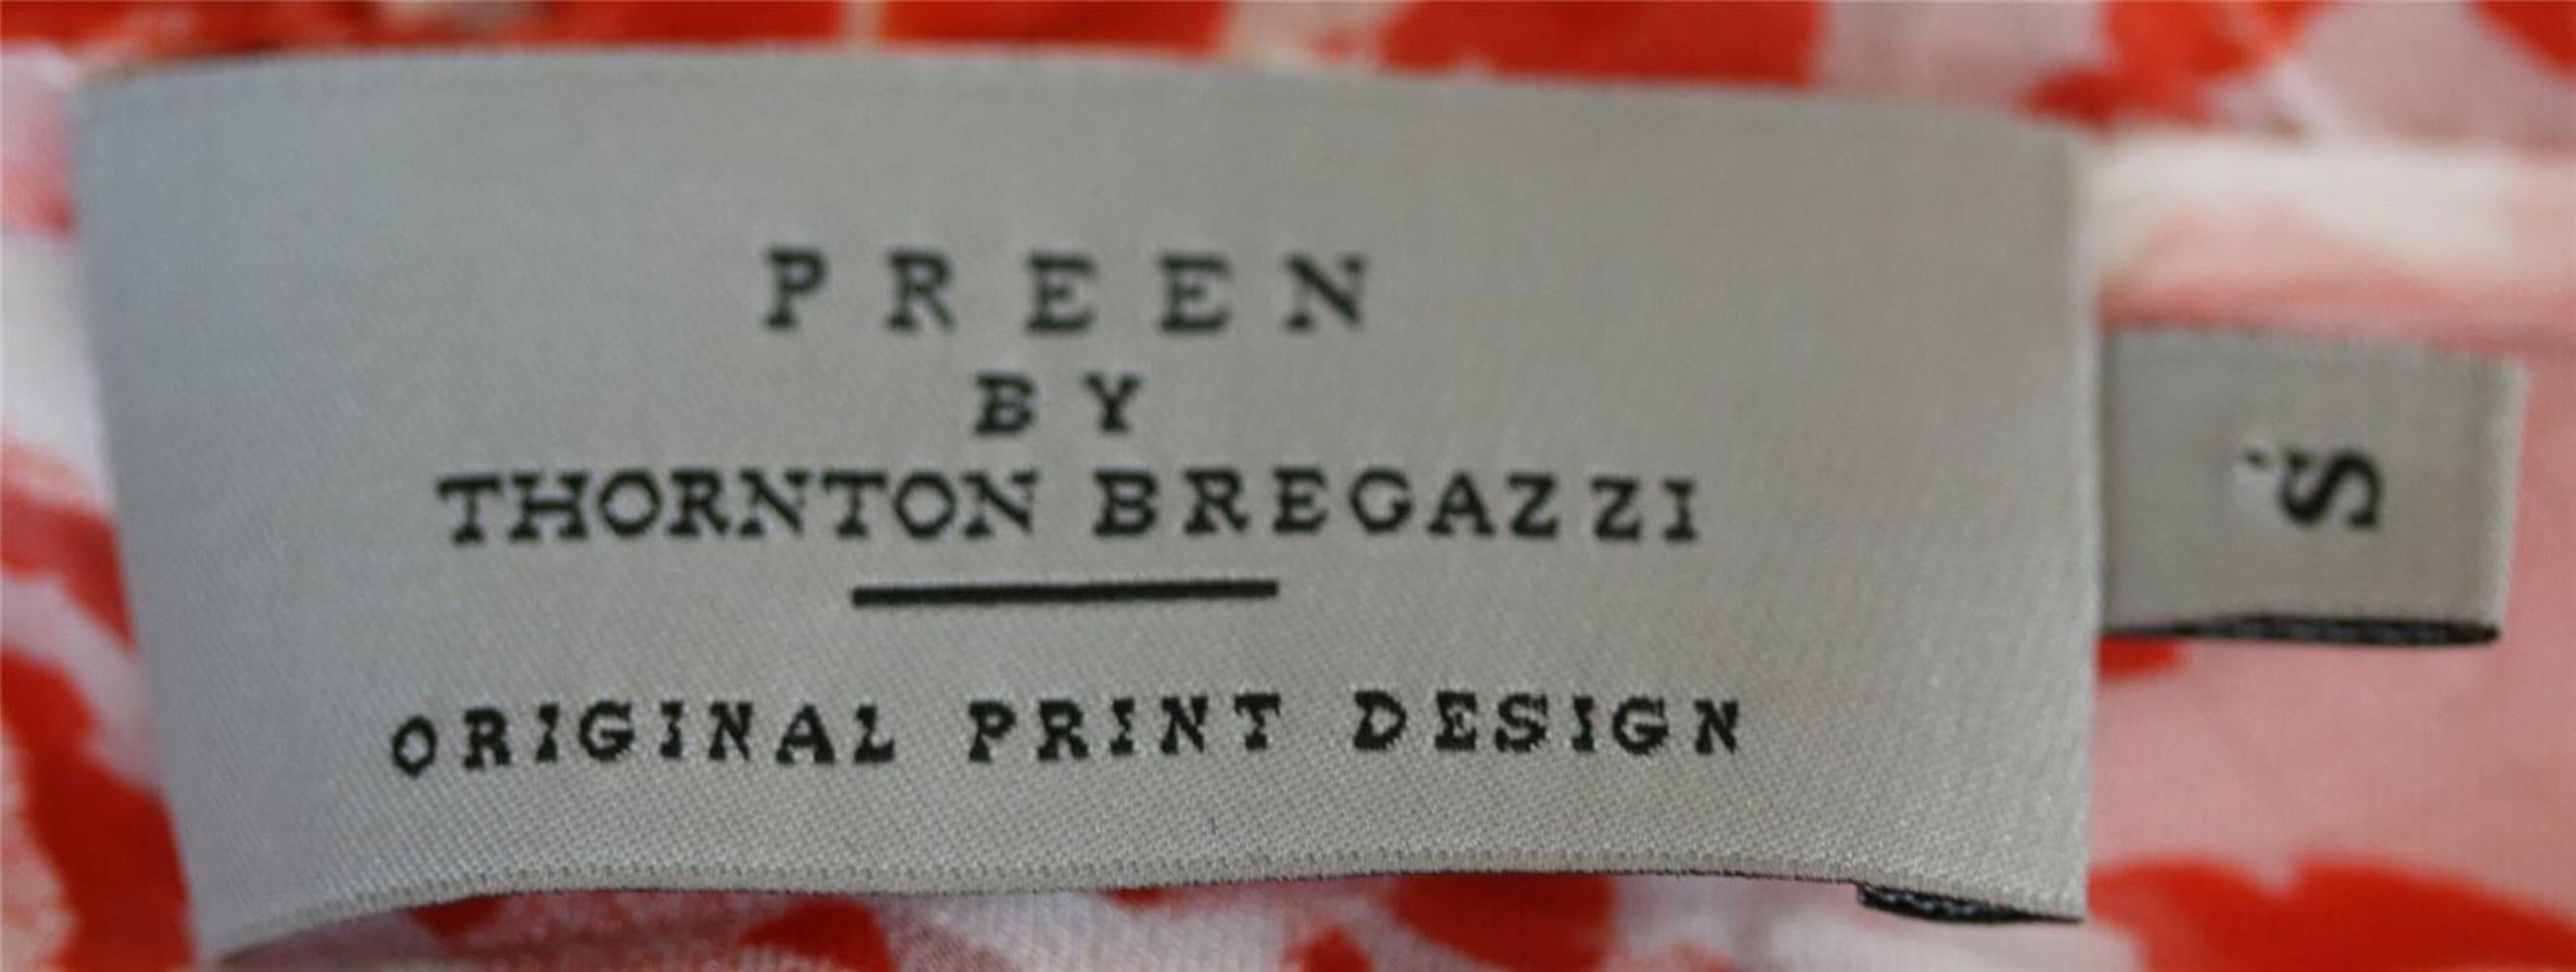 preen by thornton bregazzi dress